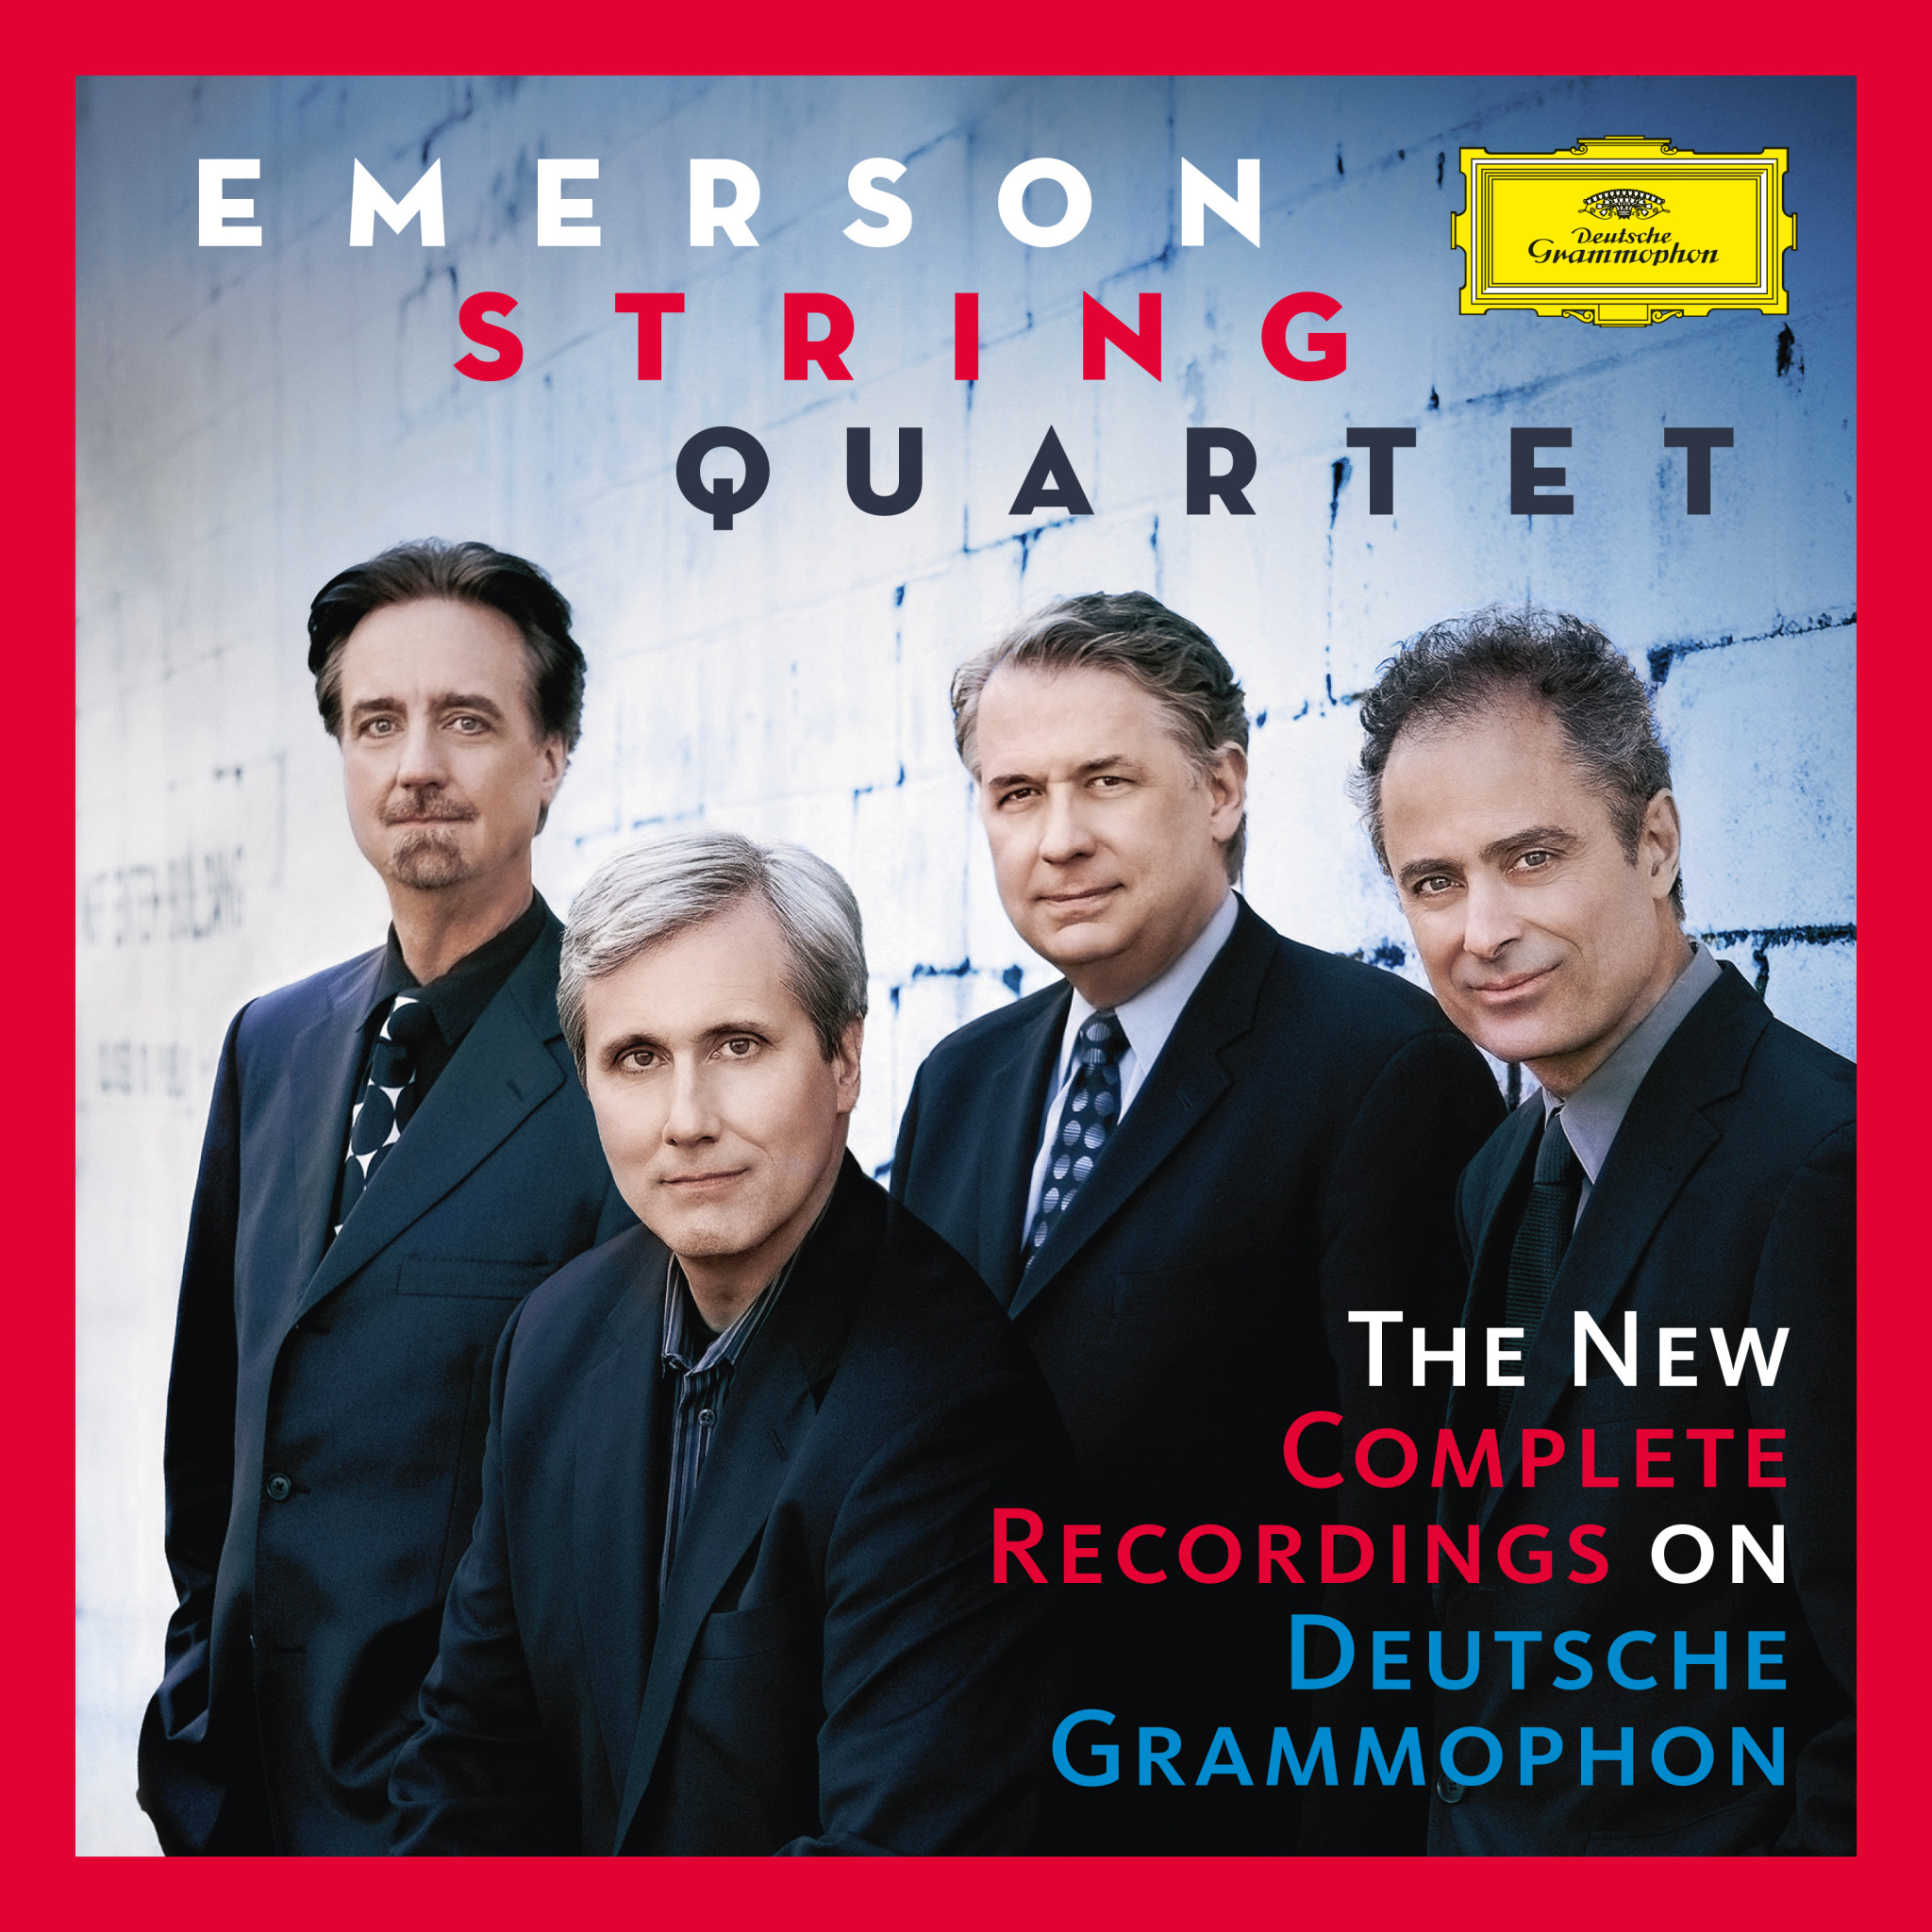 Emerson String Quartet - The New Complete Recordings on Deutsche Grammophon